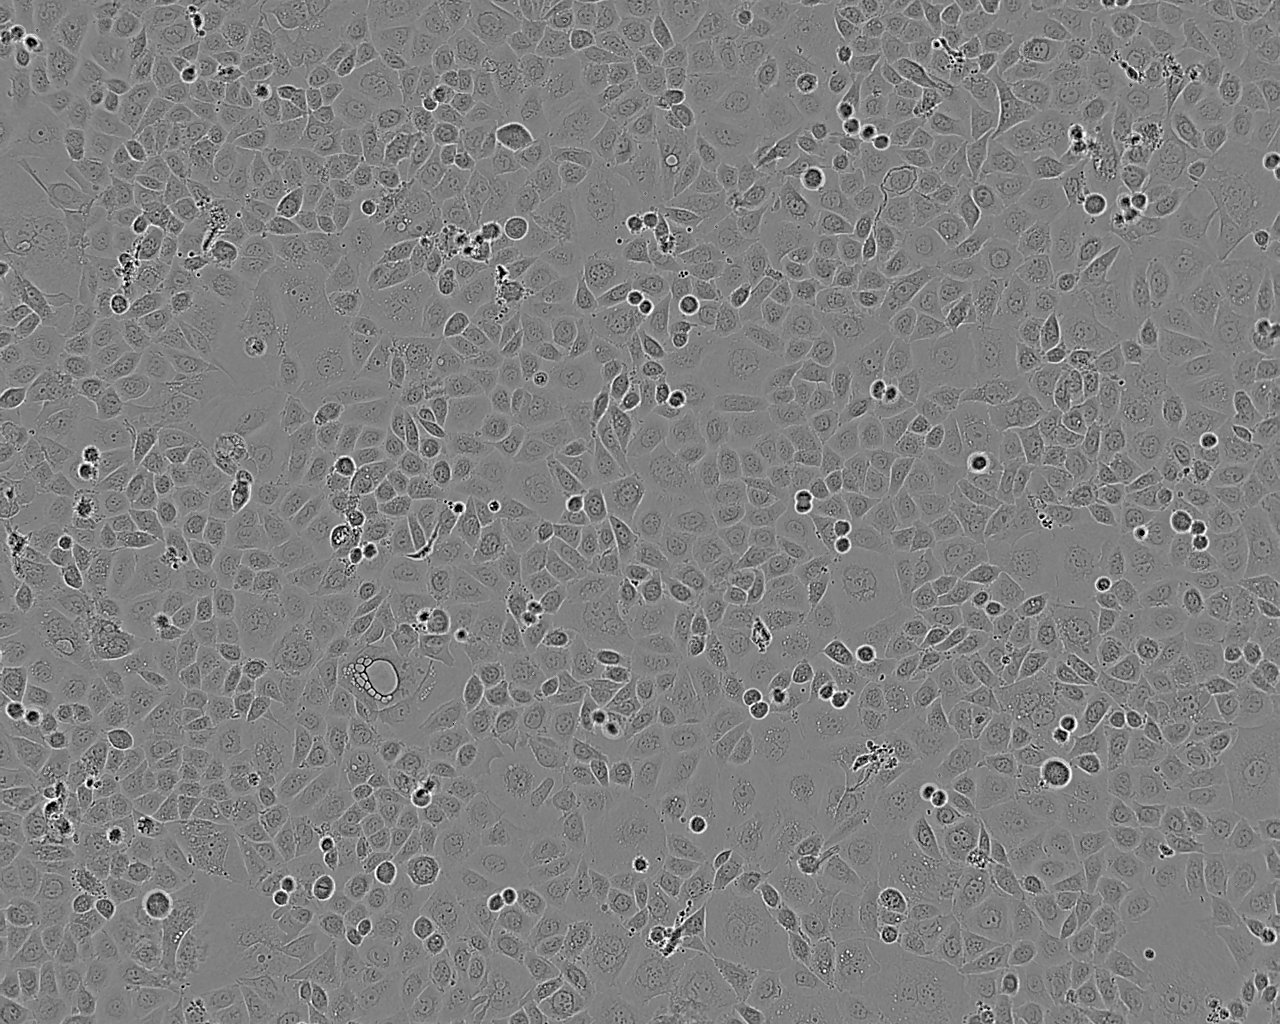 VA-ES-BJ epithelioid cells人上皮样肉瘤细胞系,VA-ES-BJ epithelioid cells